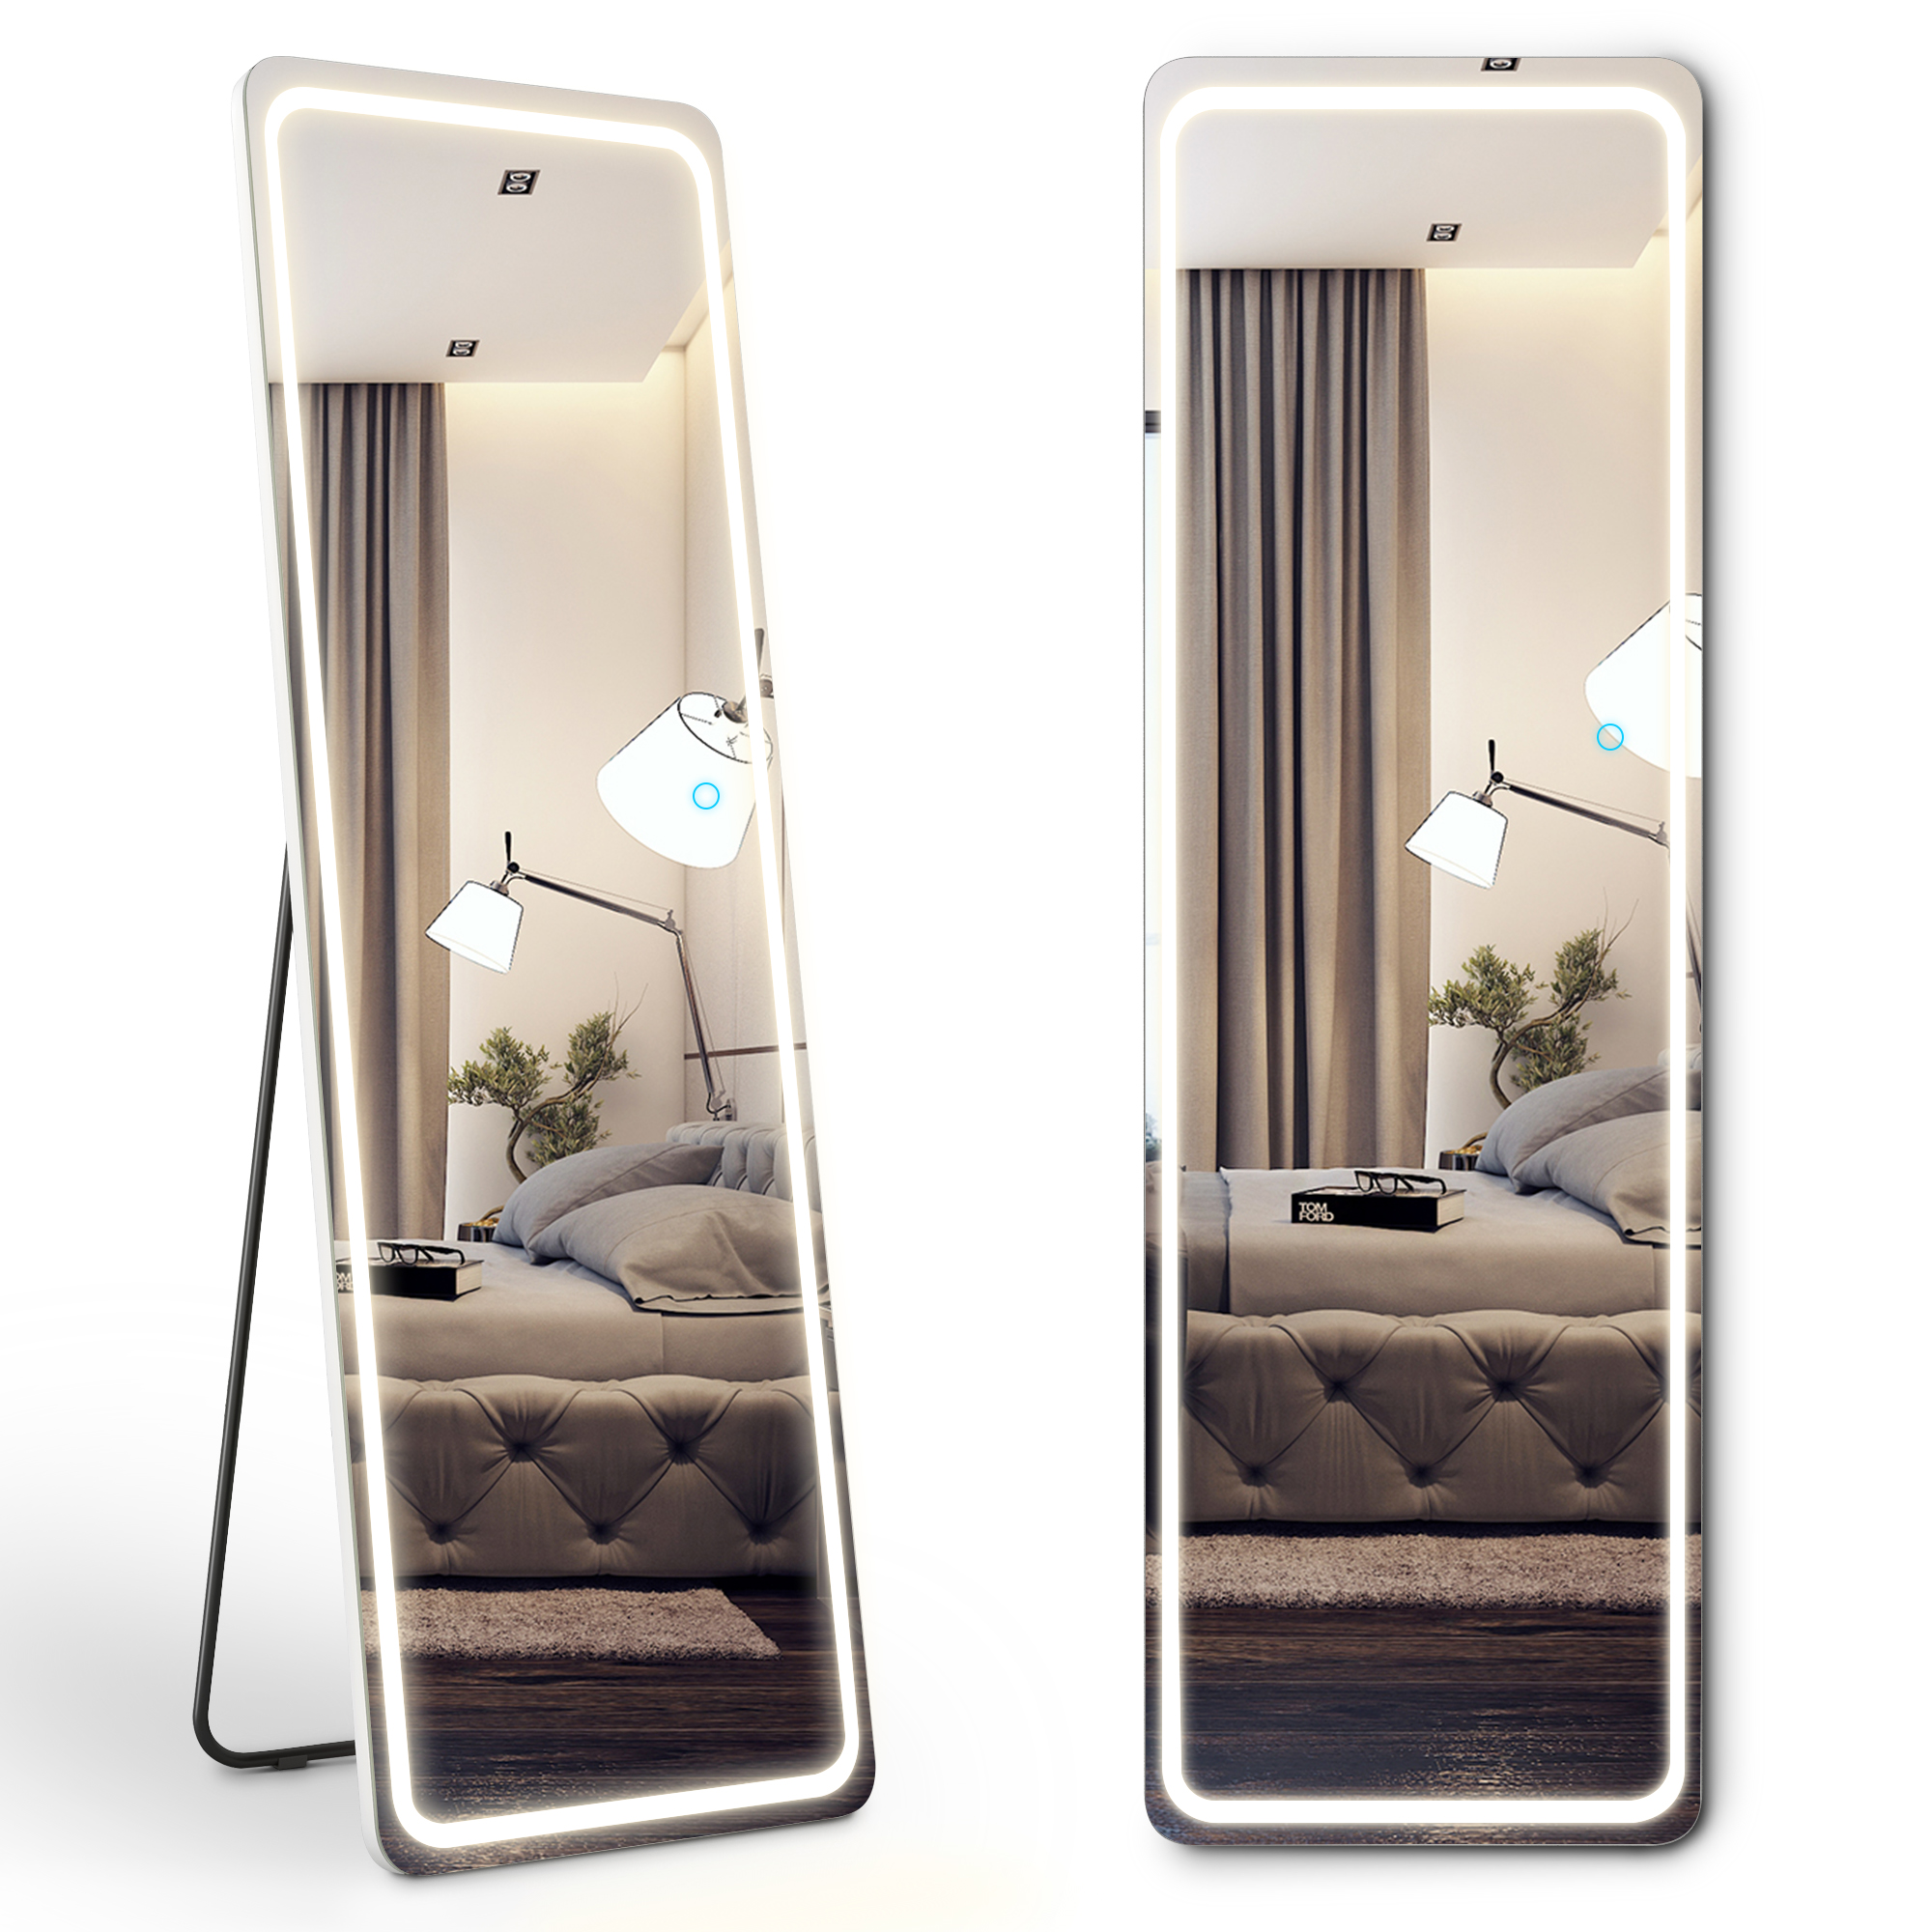 LVSOMT Full Length Mirror with Lights for living room bedroom, White/Black 63" x 20"